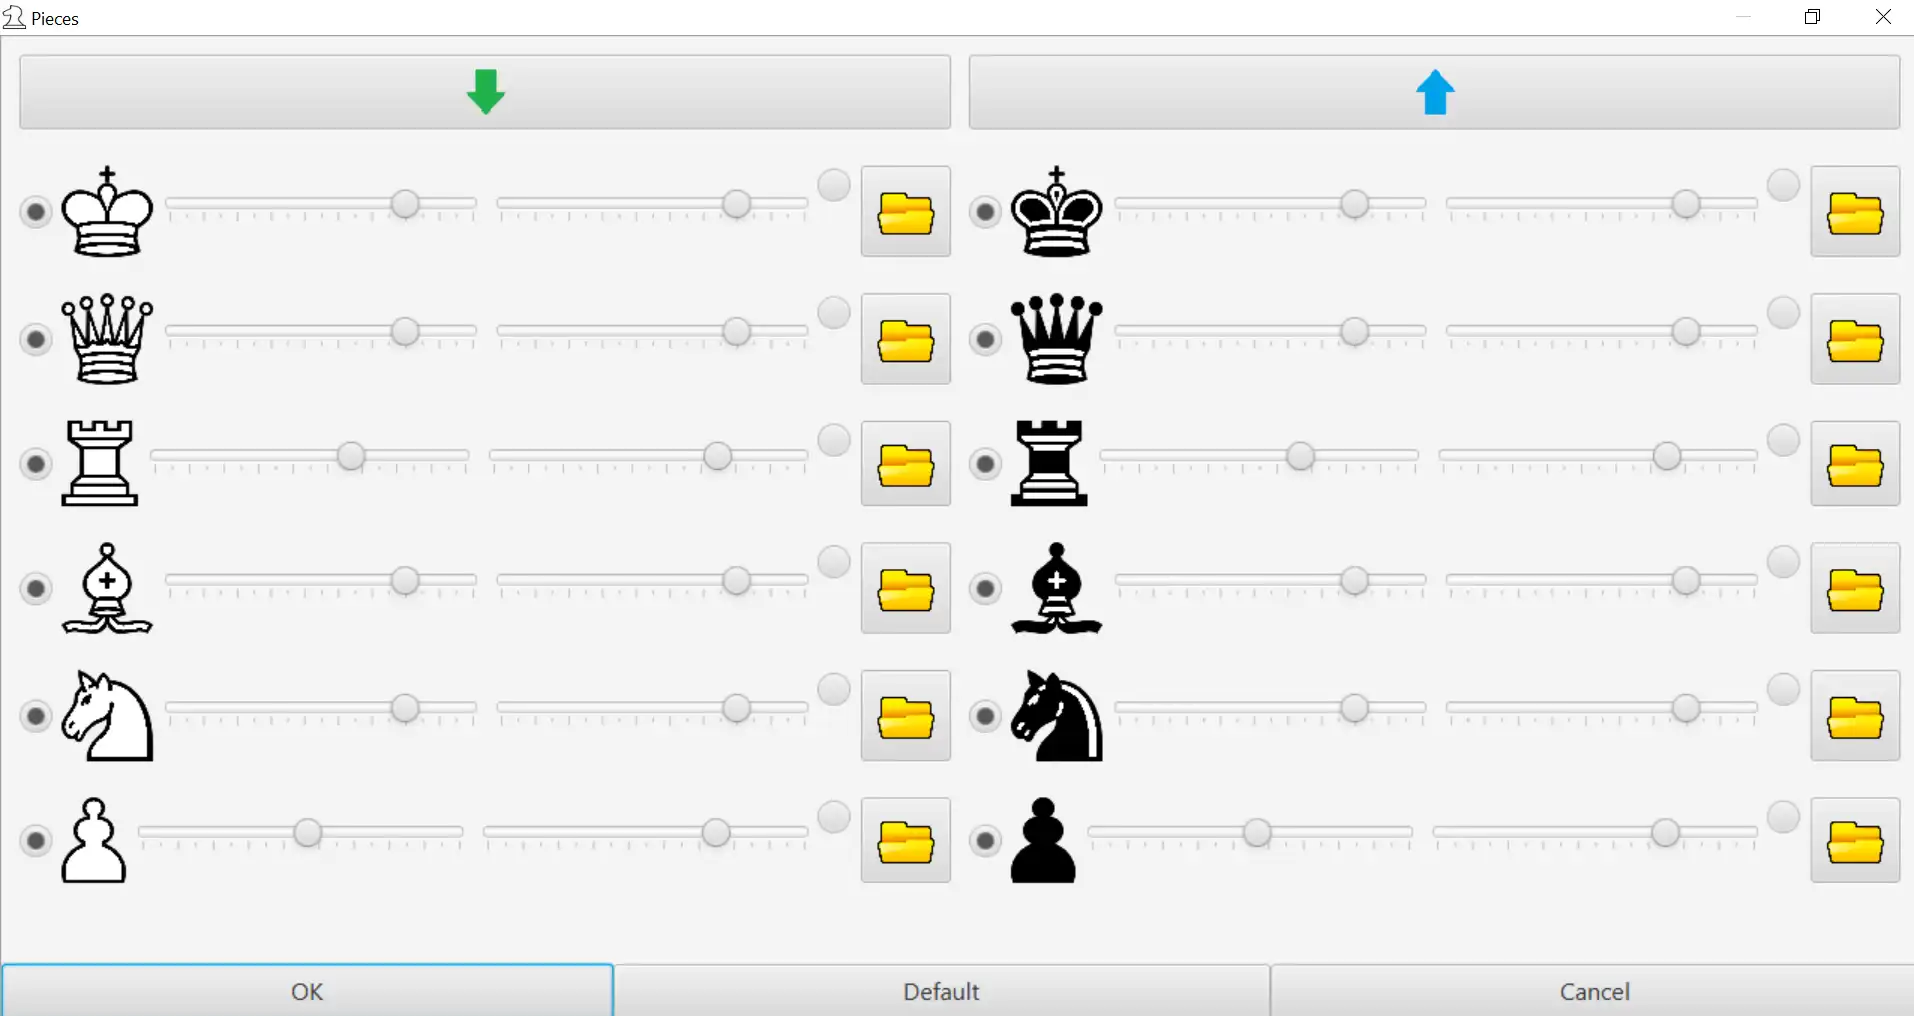 Загрузите веб-инструмент или веб-приложение Chess Tournament для проведения в Linux онлайн